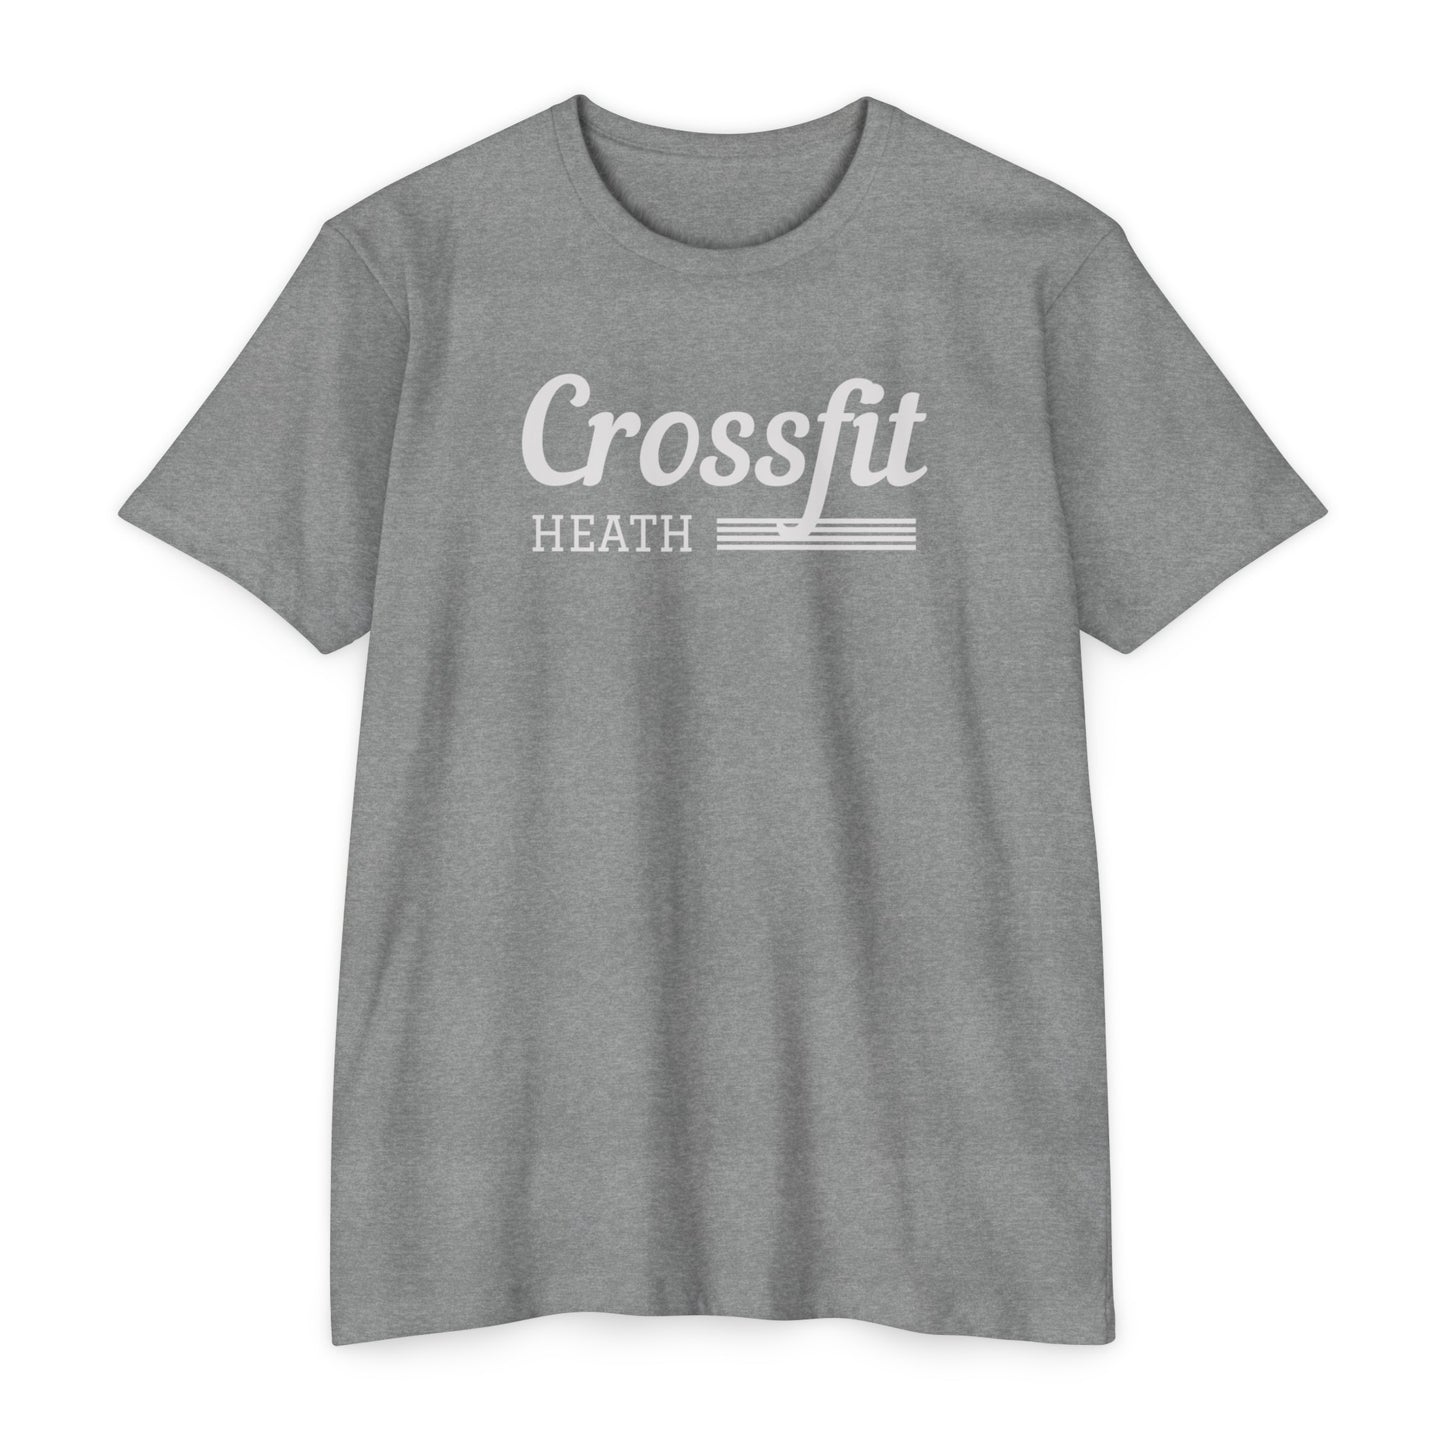 Retro CrossFit Heath Tee